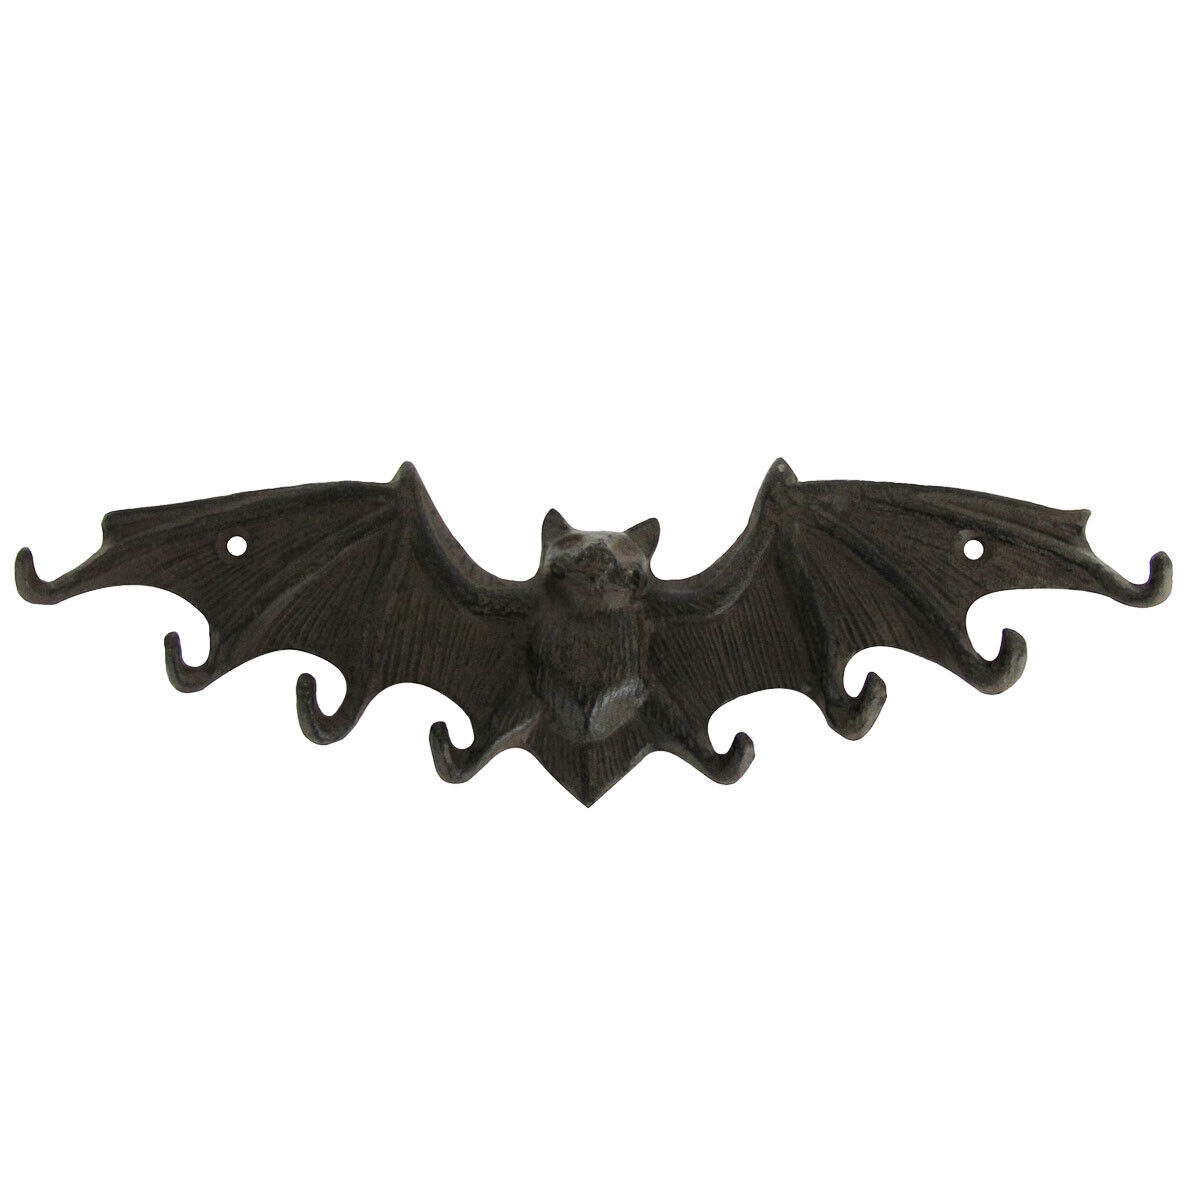 Cast Iron Wall Mount Fruit Bat Wings Key Holder Hook Gothic Coat Hat Rack Hooks